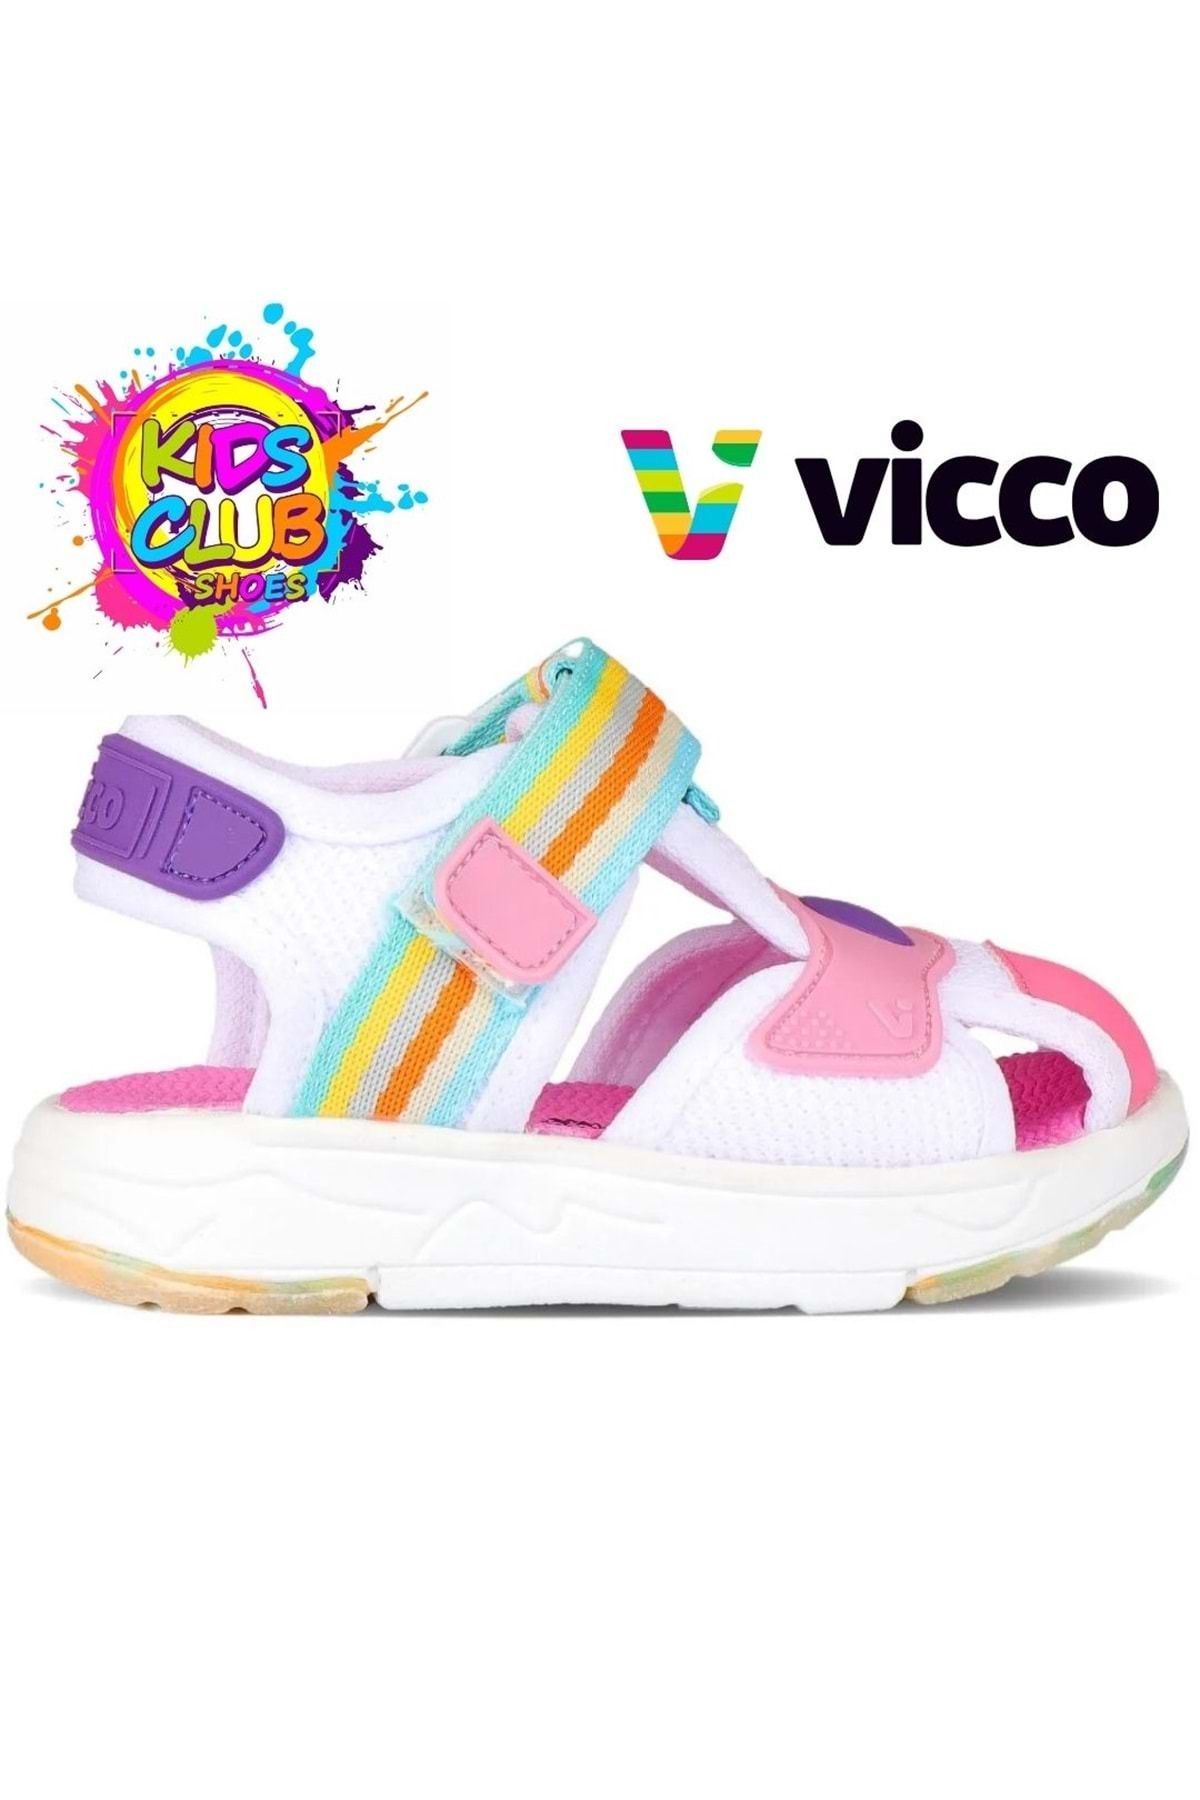 Kids Club Shoes Vicco Flow II Ortopedik Çocuk Sandalet BEYAZ